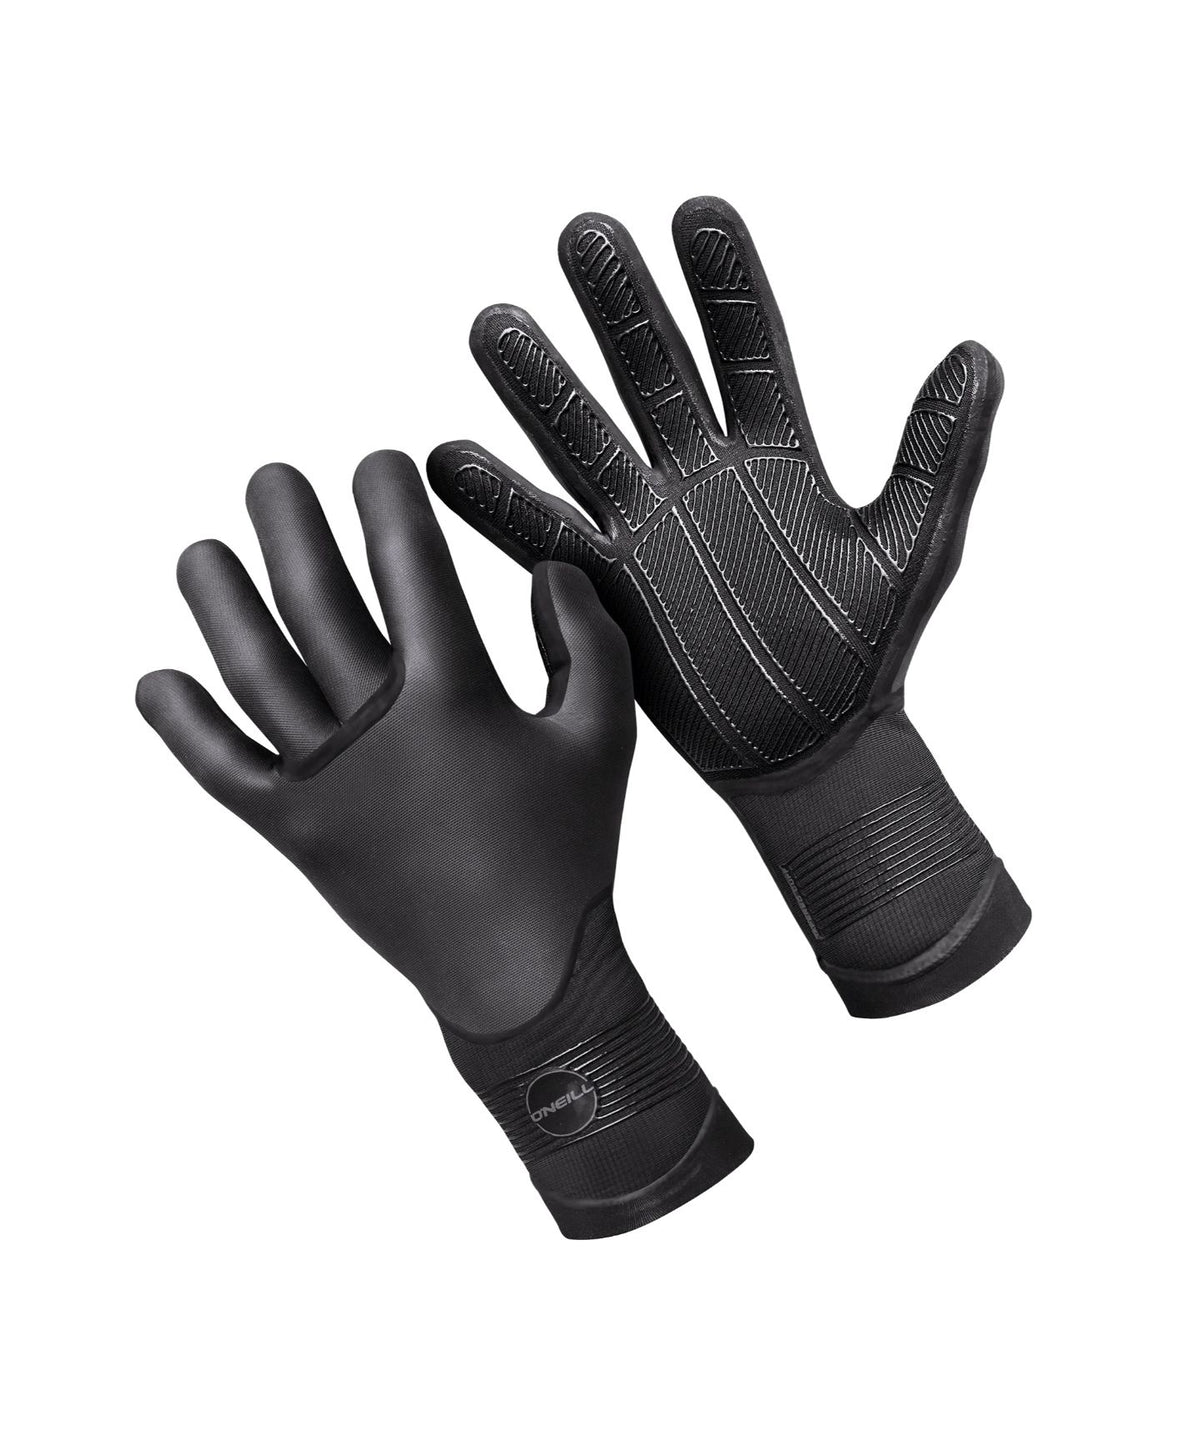 Psycho Tech 3mm Wetsuit Glove - Black